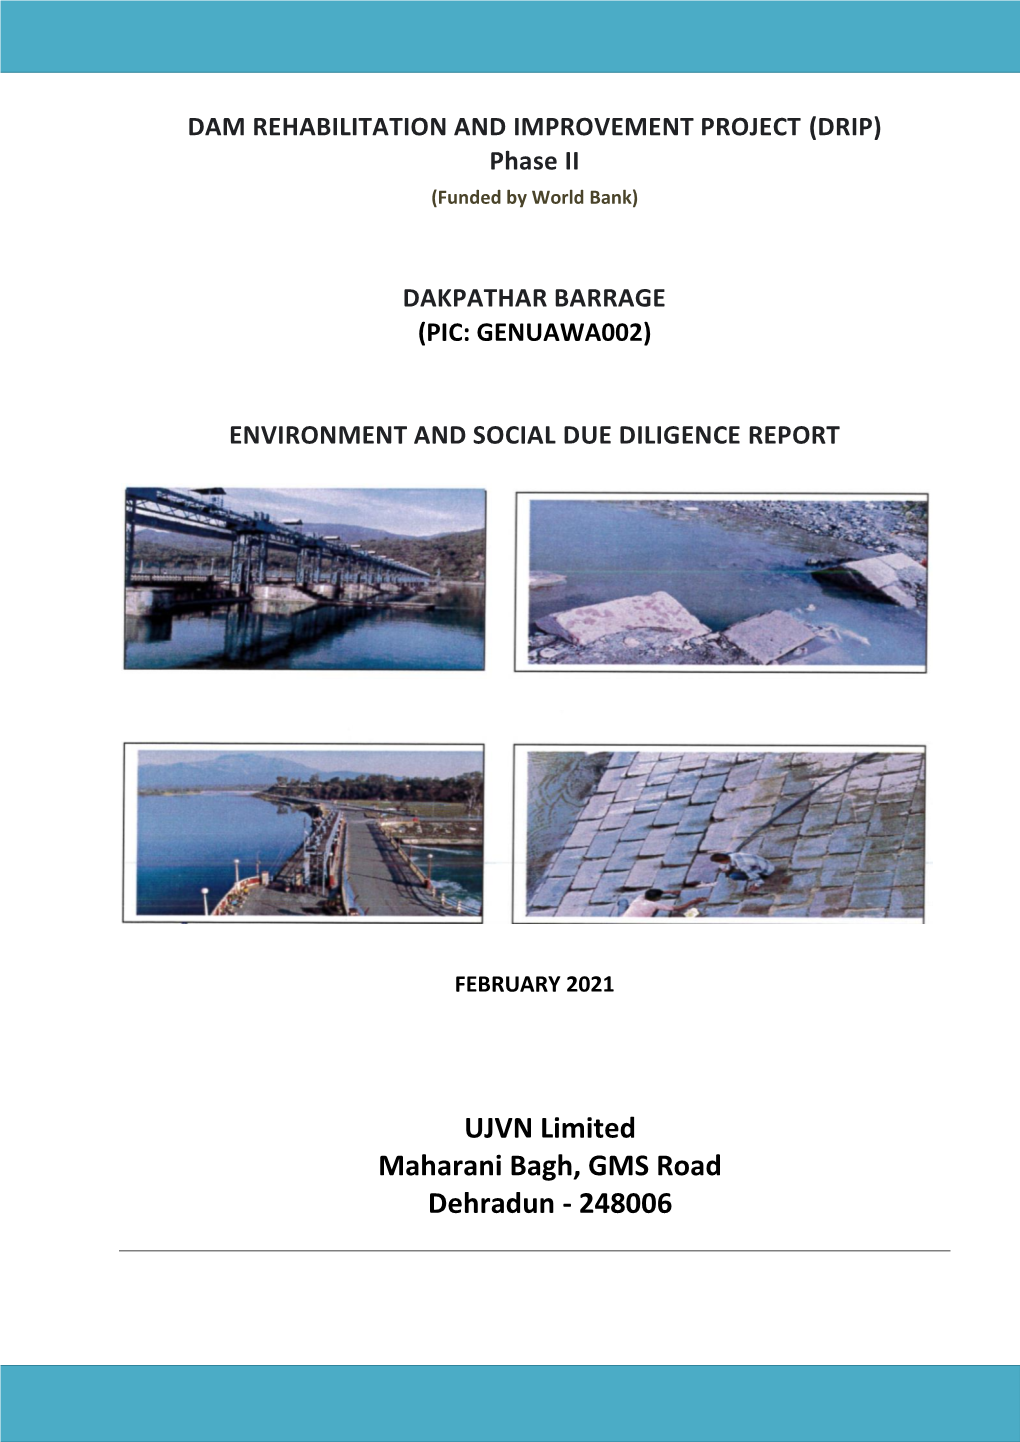 Environmental & Social Due Diligence Report, Dakpathar Barrage